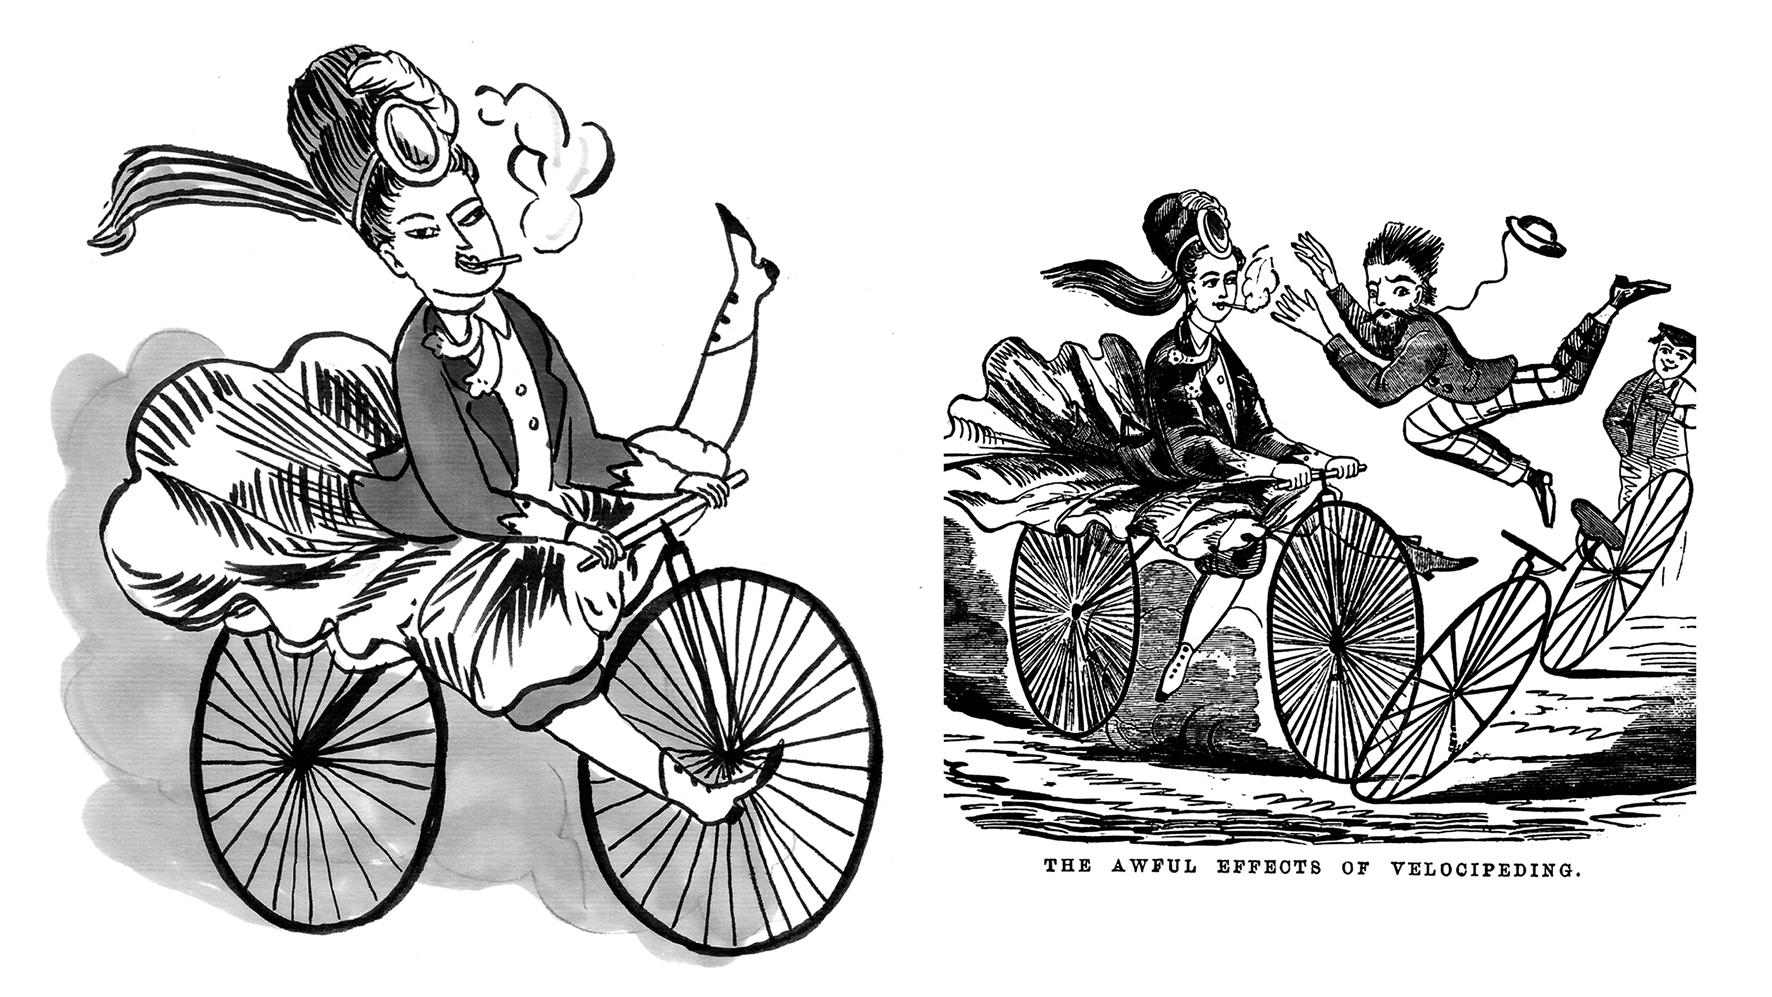 A woman on a bicycle speeds toward a man.